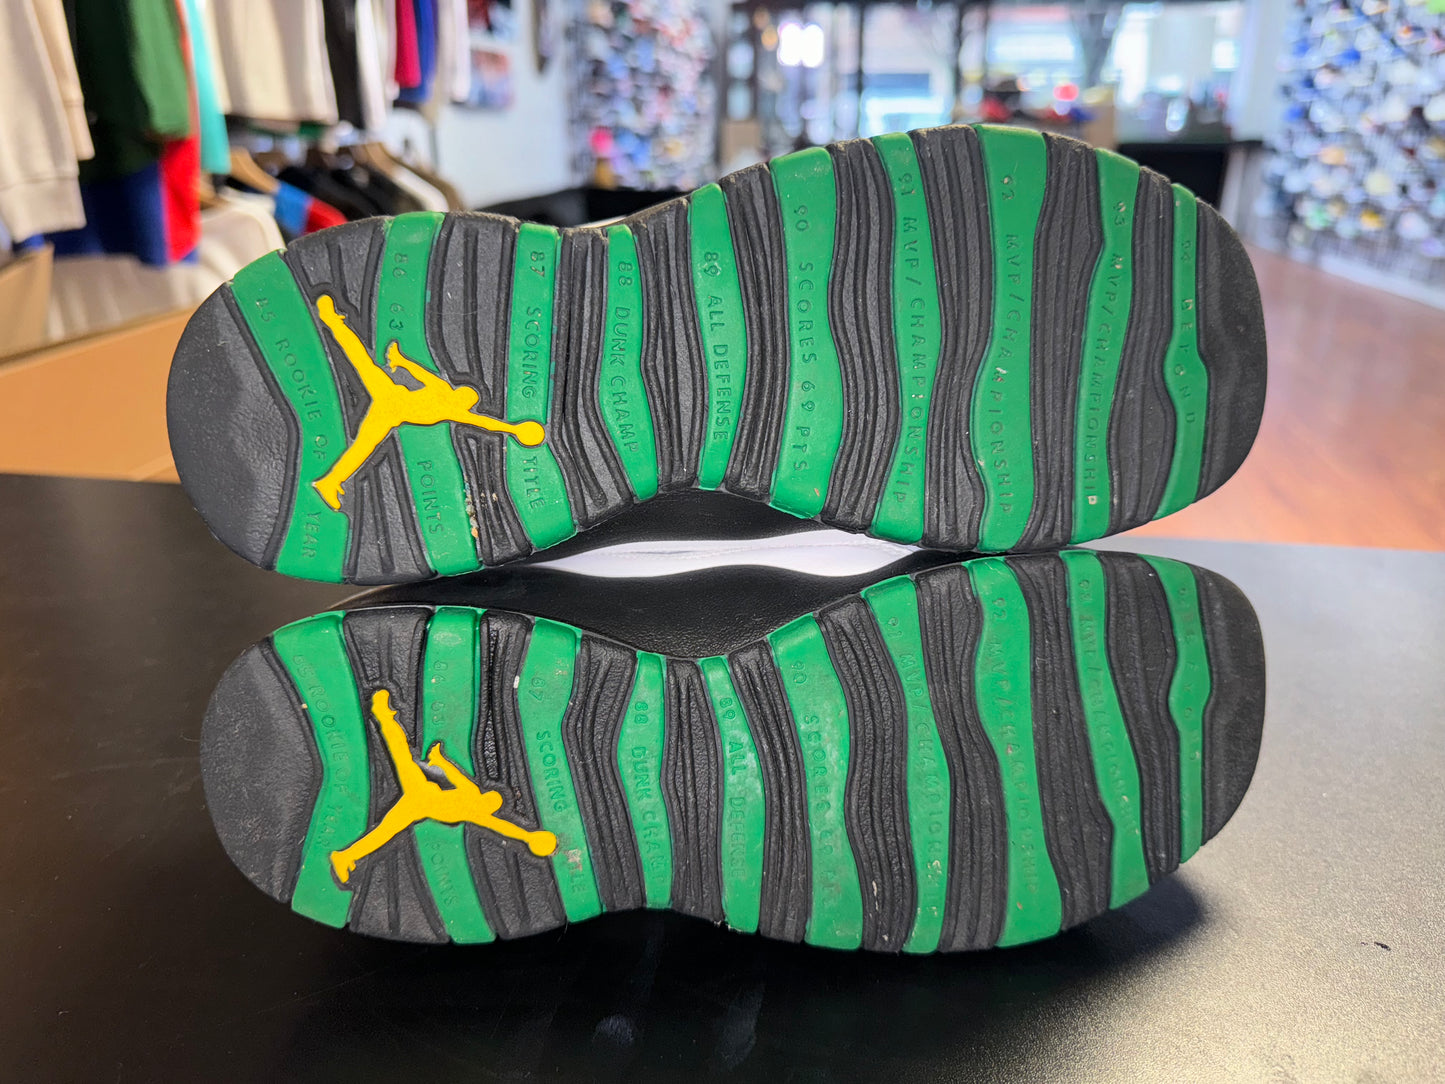 Size 7y Air Jordan 10 “Celtics" (MAMO)